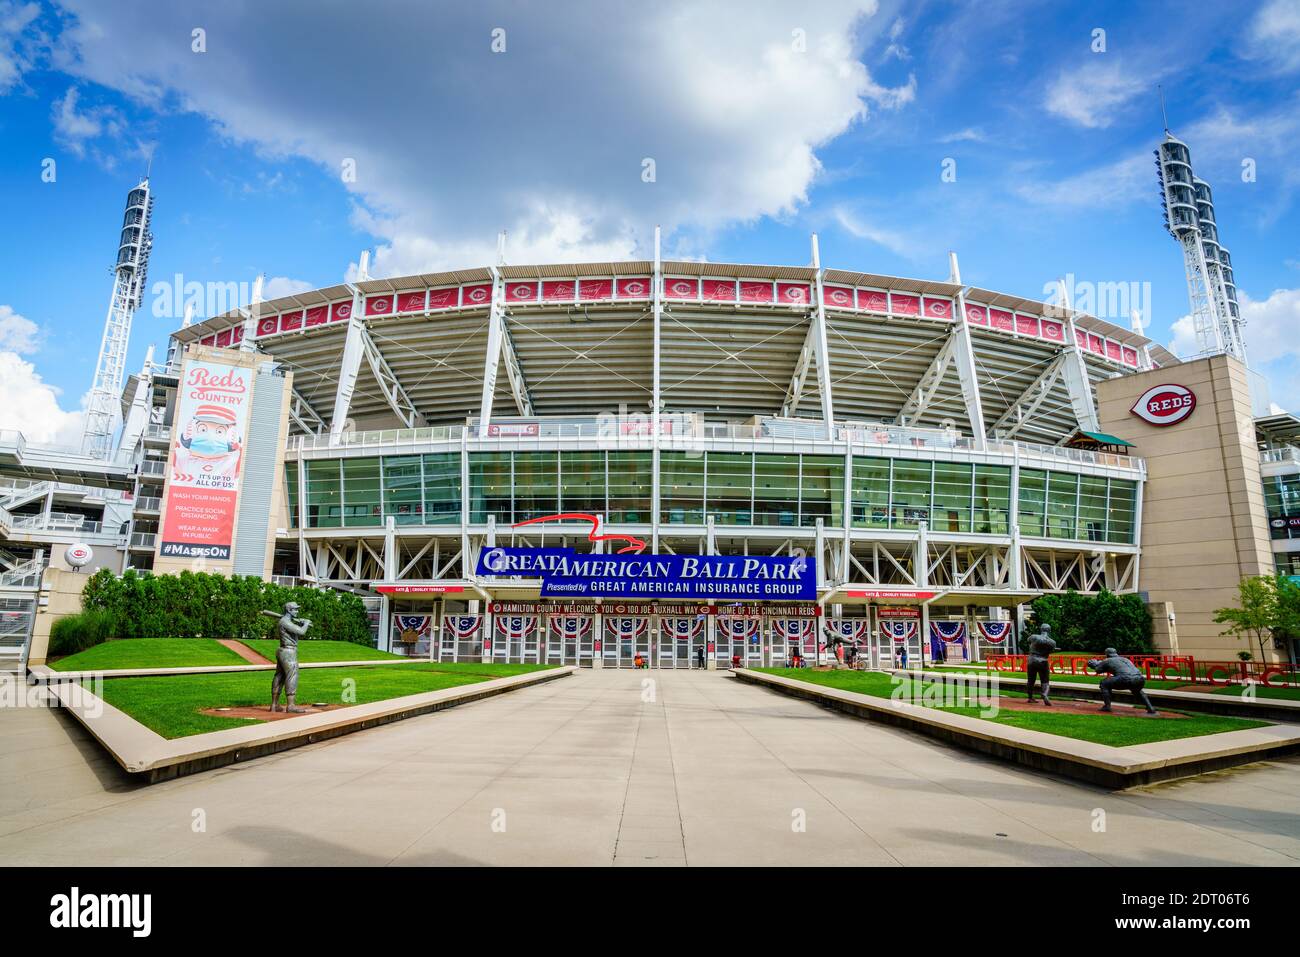 Cincinnati, Ohio, 29. August 2020: Großartiges American Ball Park Stadion, das Heimstadion des Baseballteams Cincinnati Reds Stockfoto